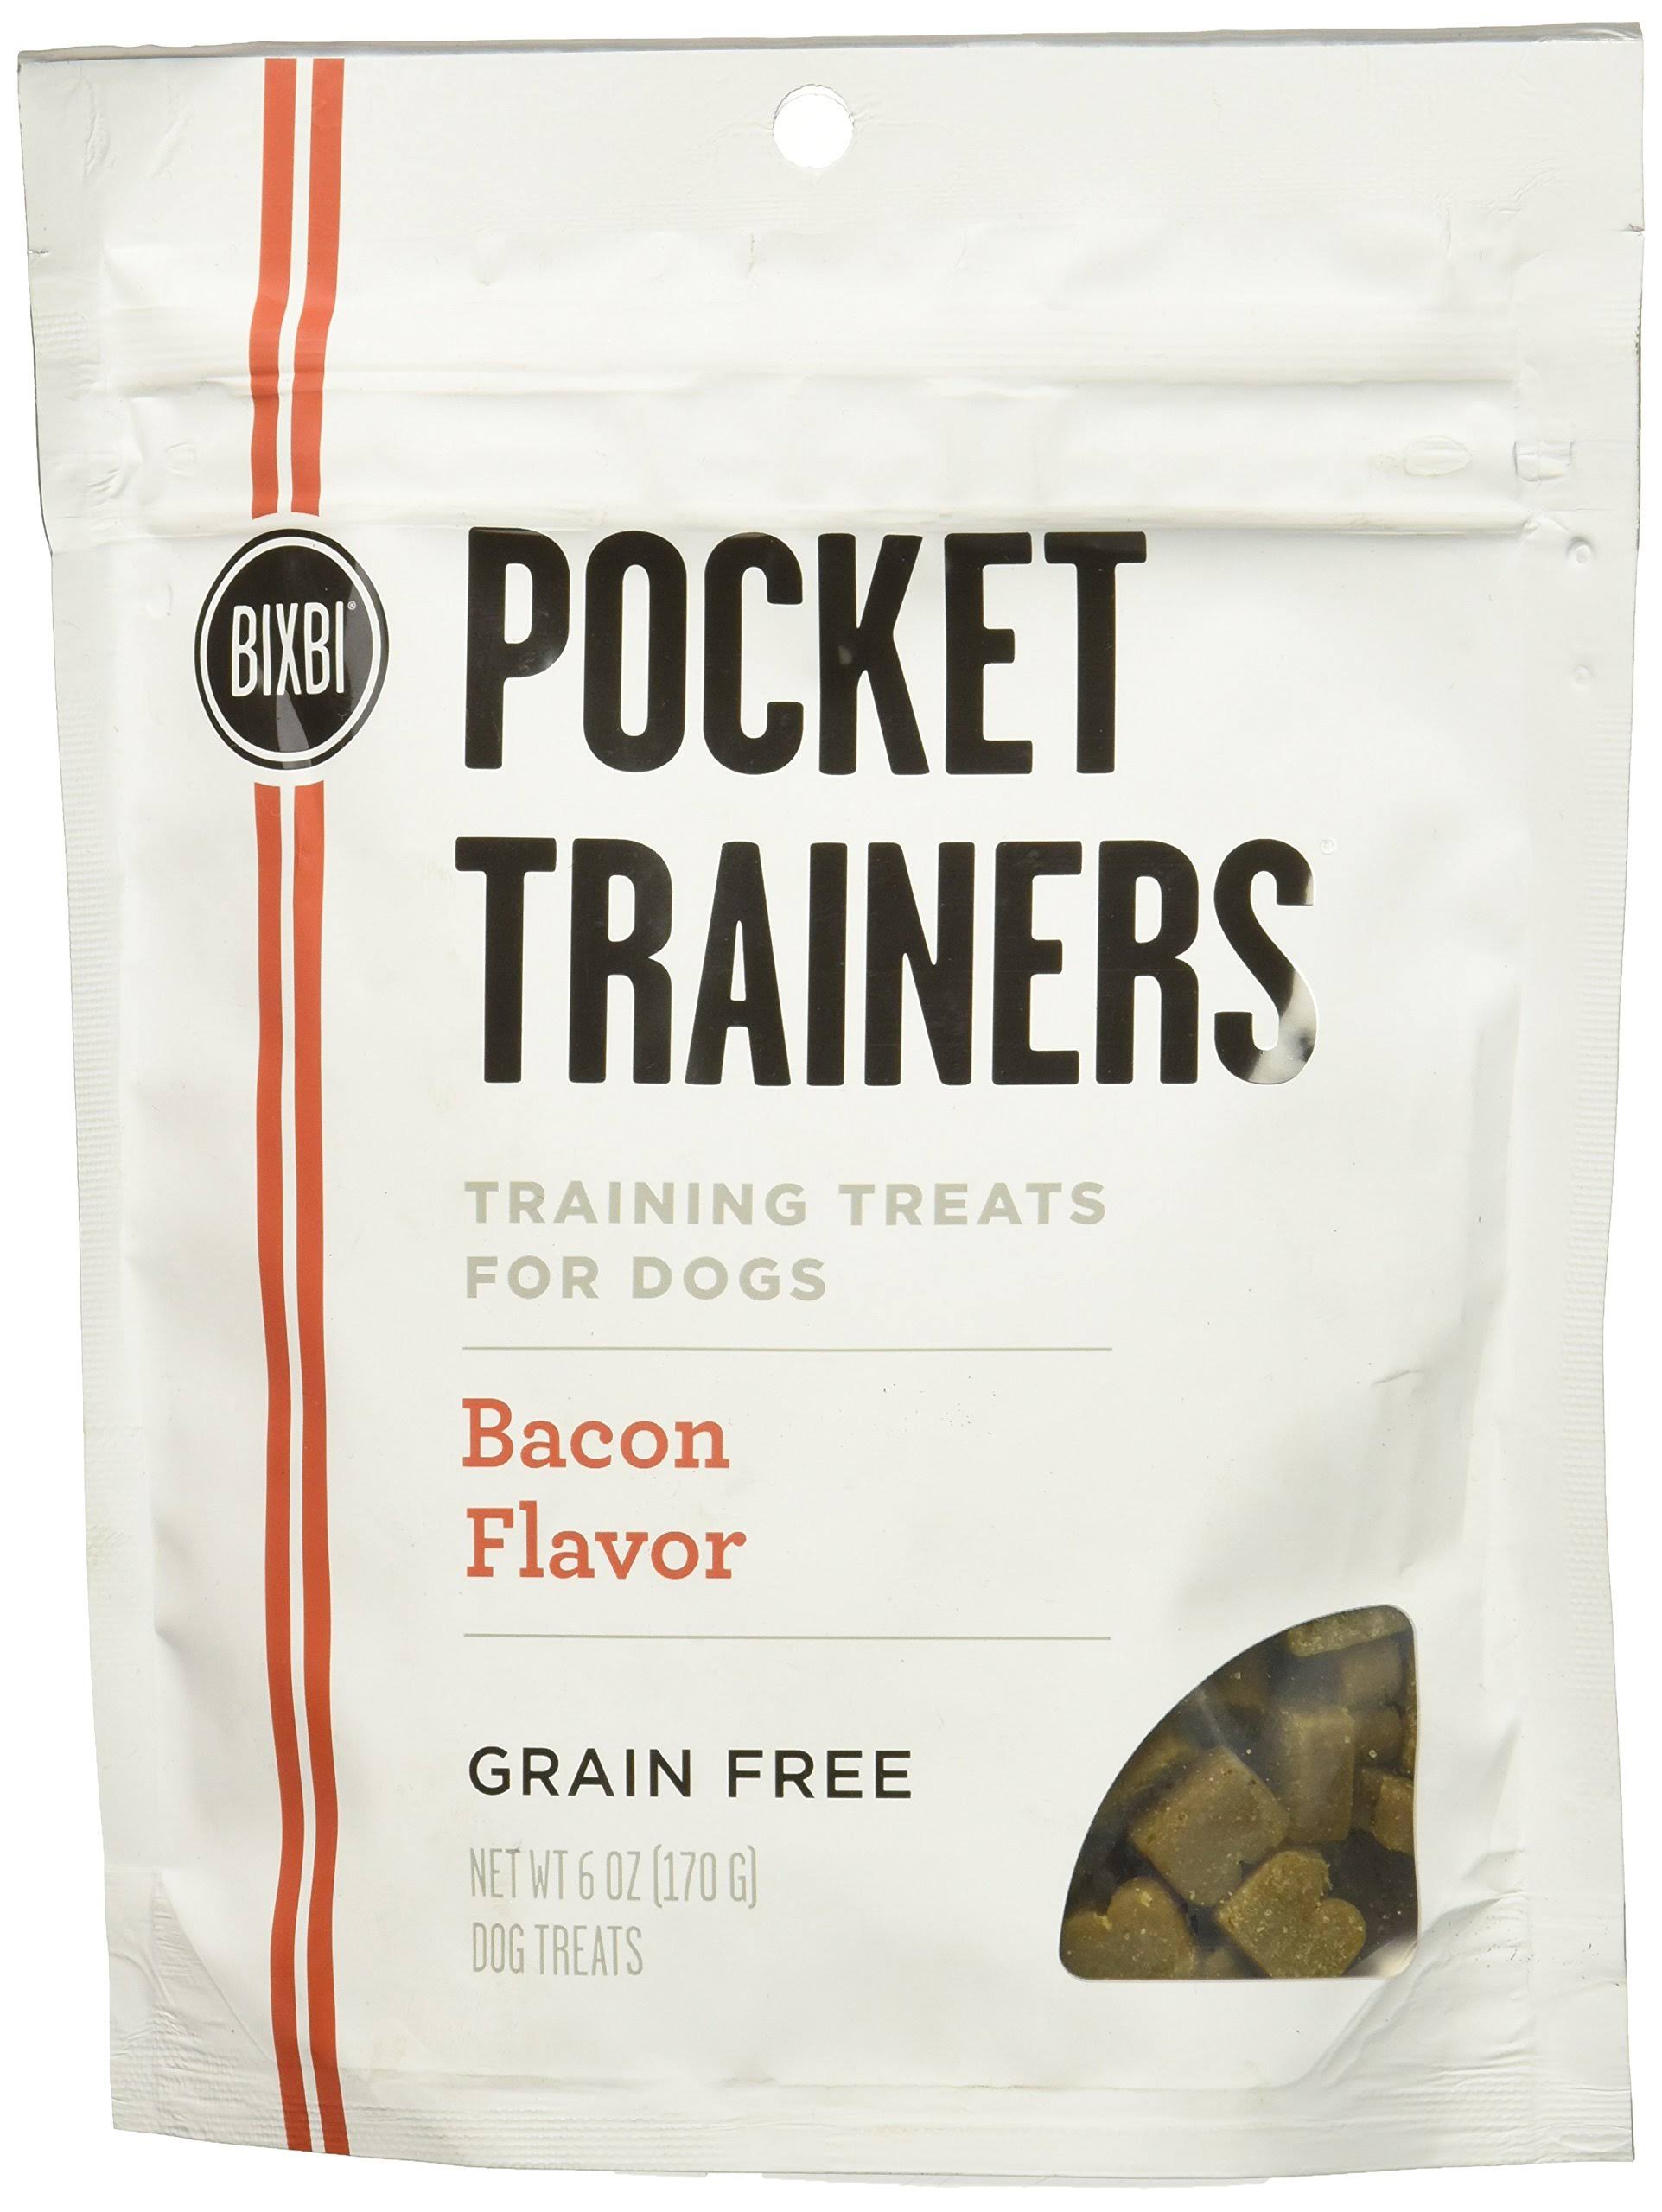 Bixbi Pocket Trainers Bacon 6oz Dog Treats